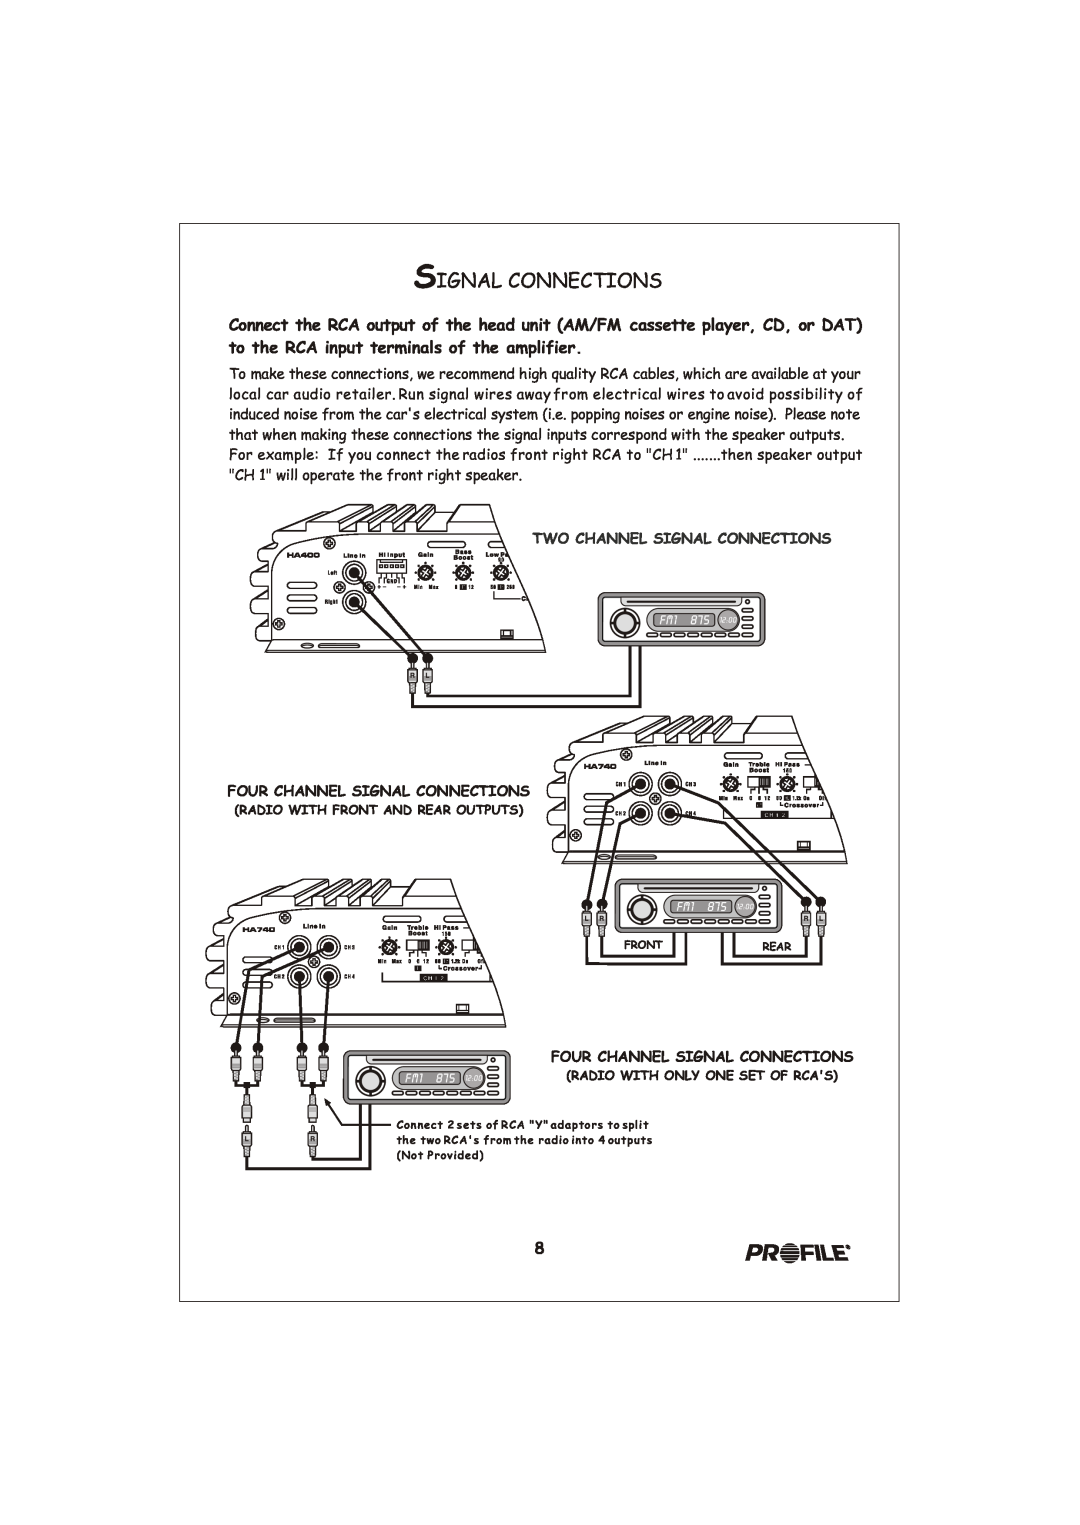 Profile HA1000 installation instructions Four Channel Signal Connections, Two Channel Signal Connections 